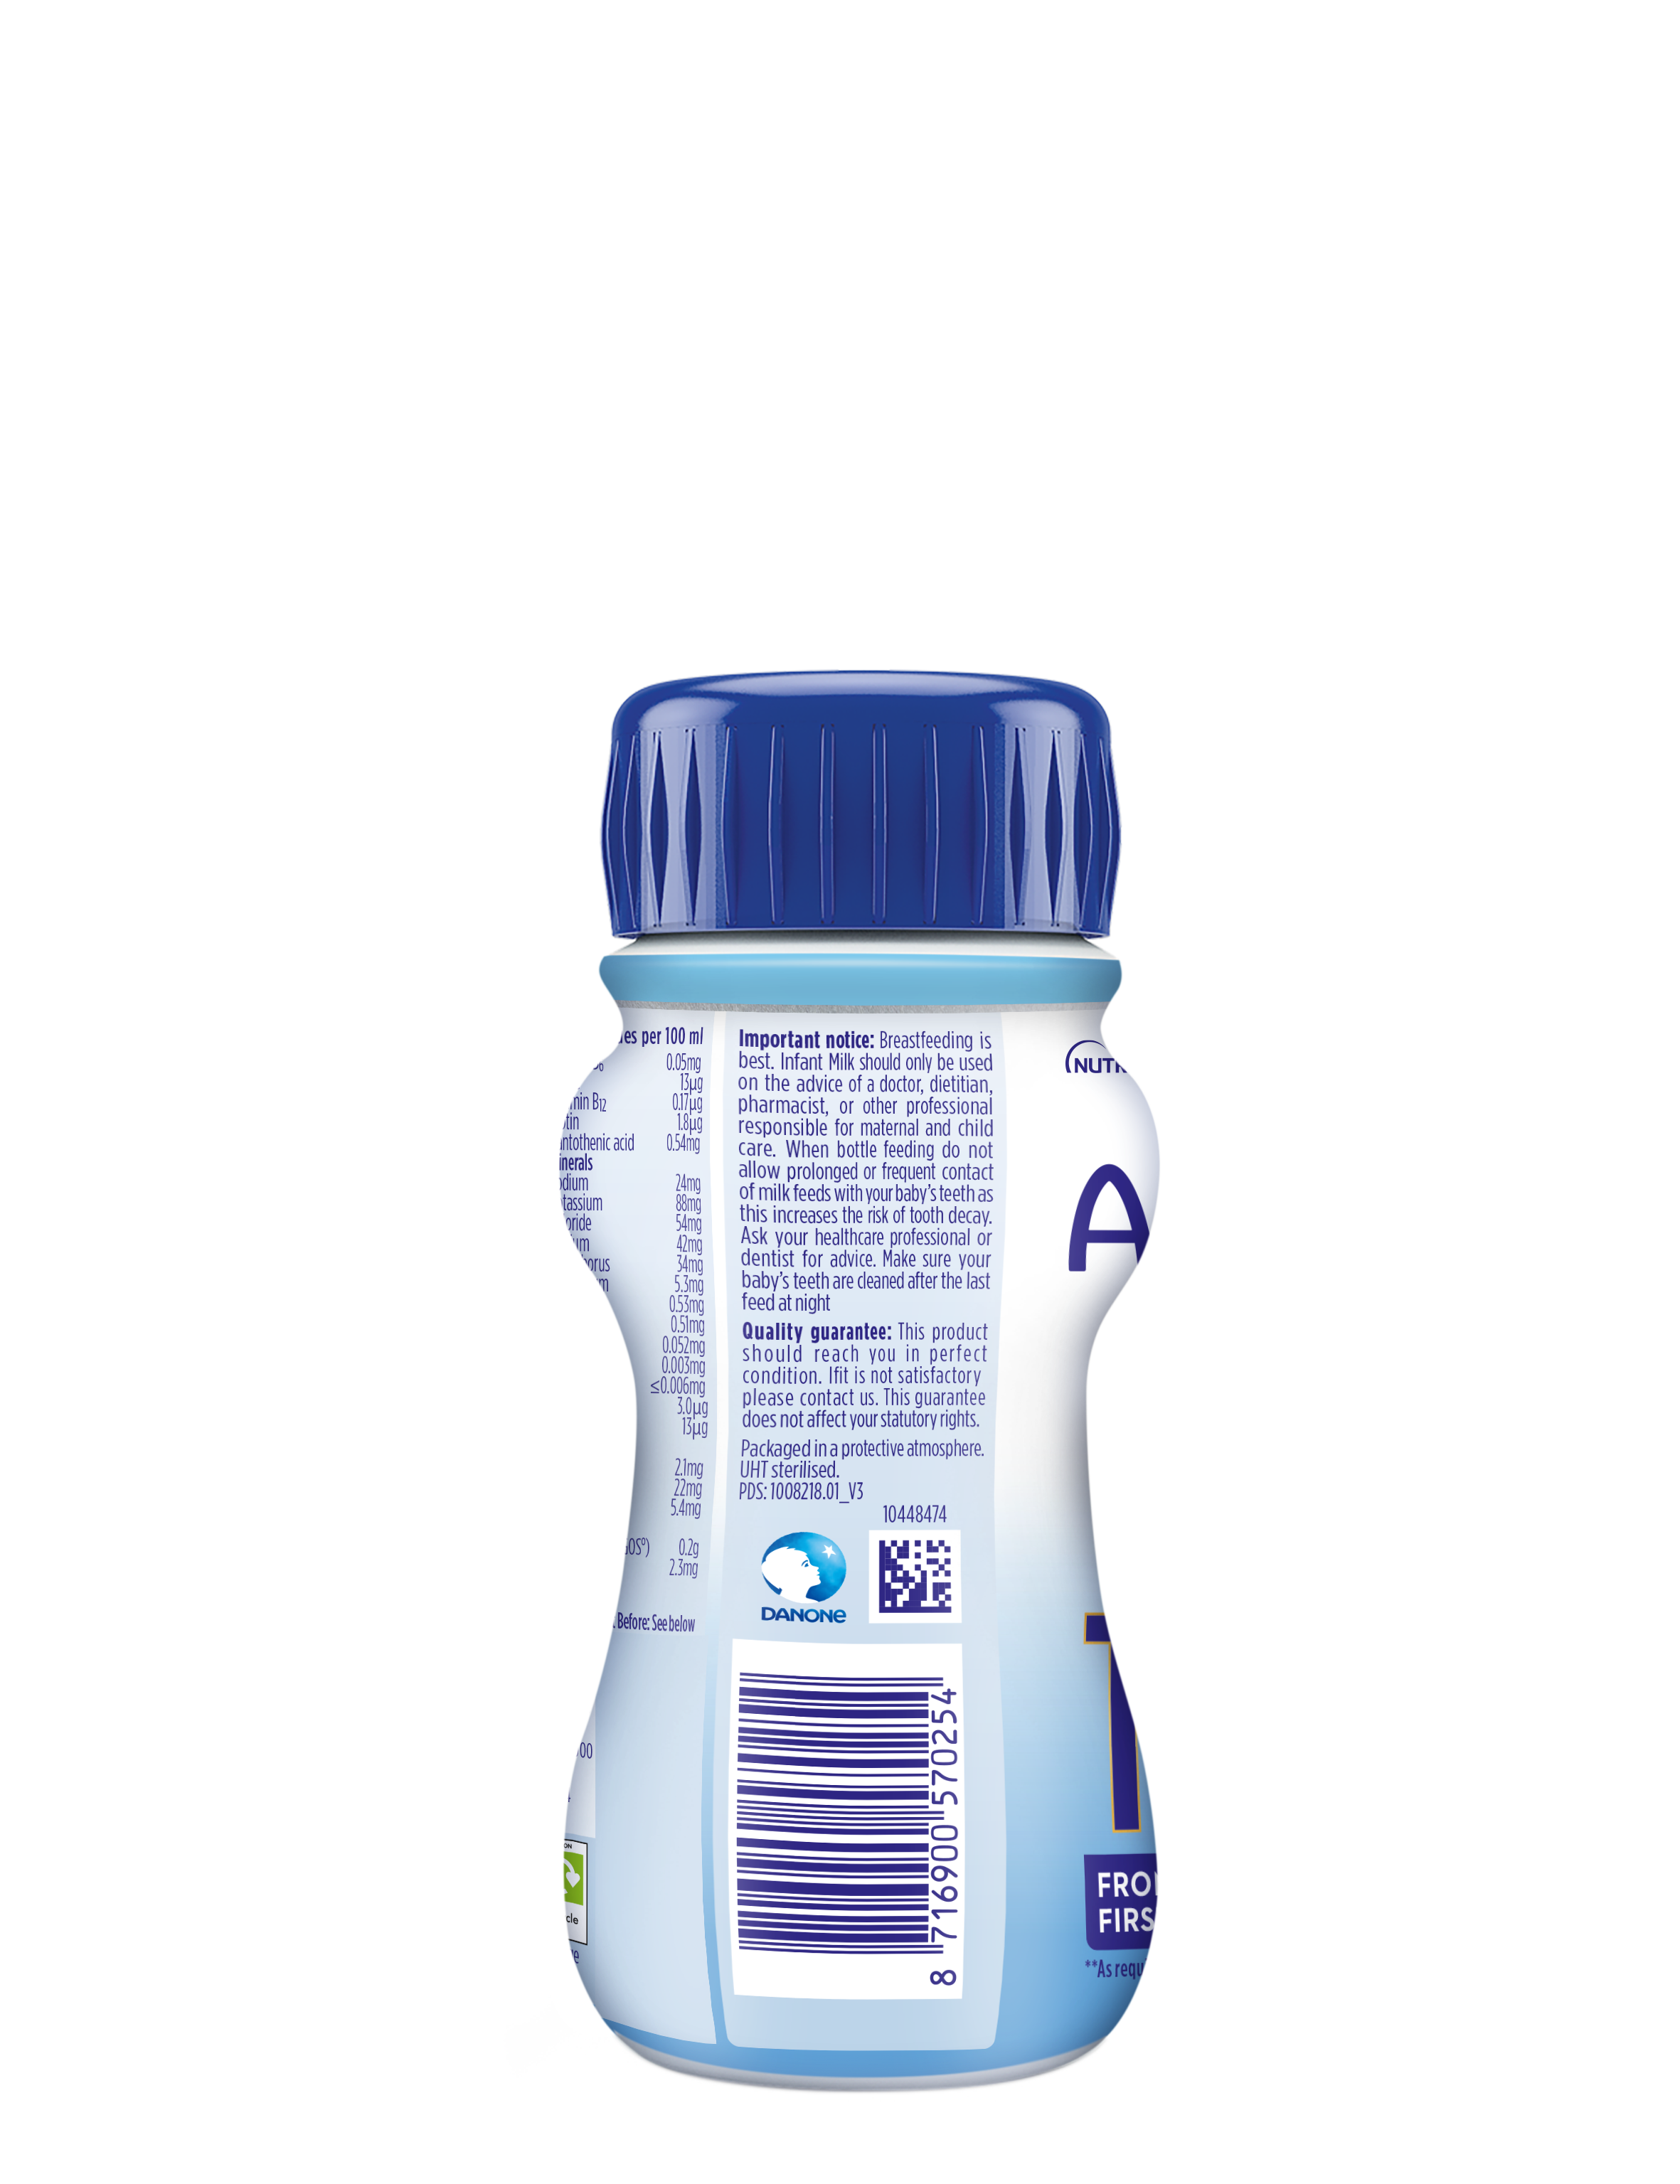 Aptamil® Advanced First Infant Milk Ready To Feed 200ml